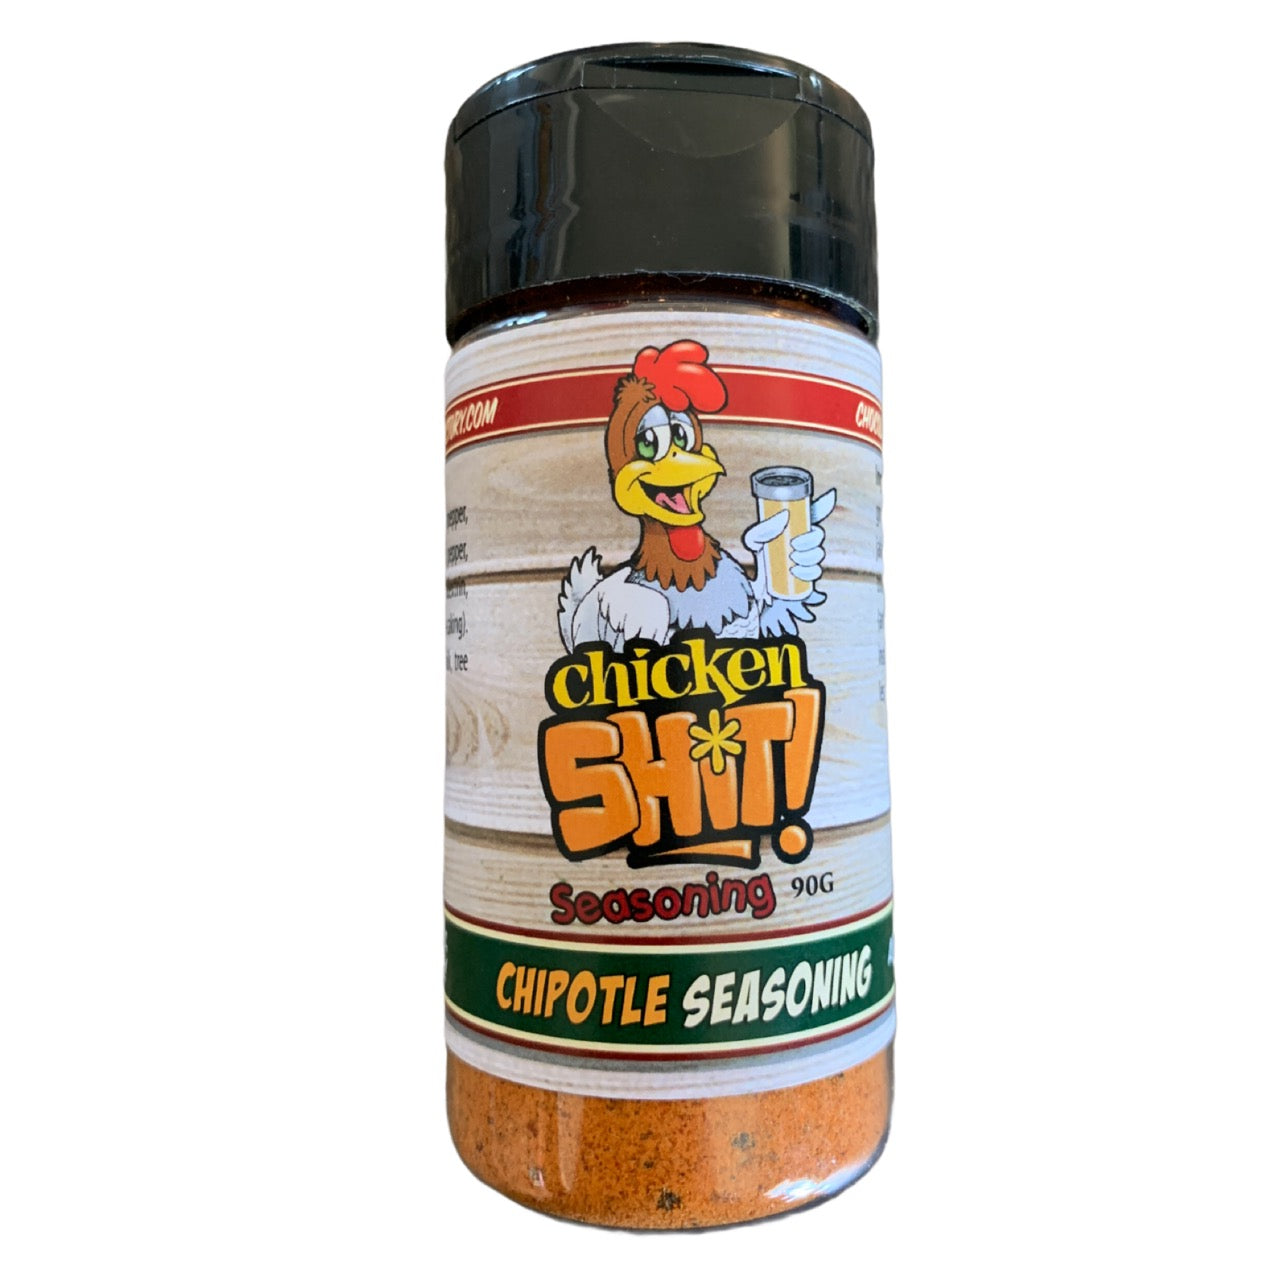 Chicken Shit Chipotle Seasonings